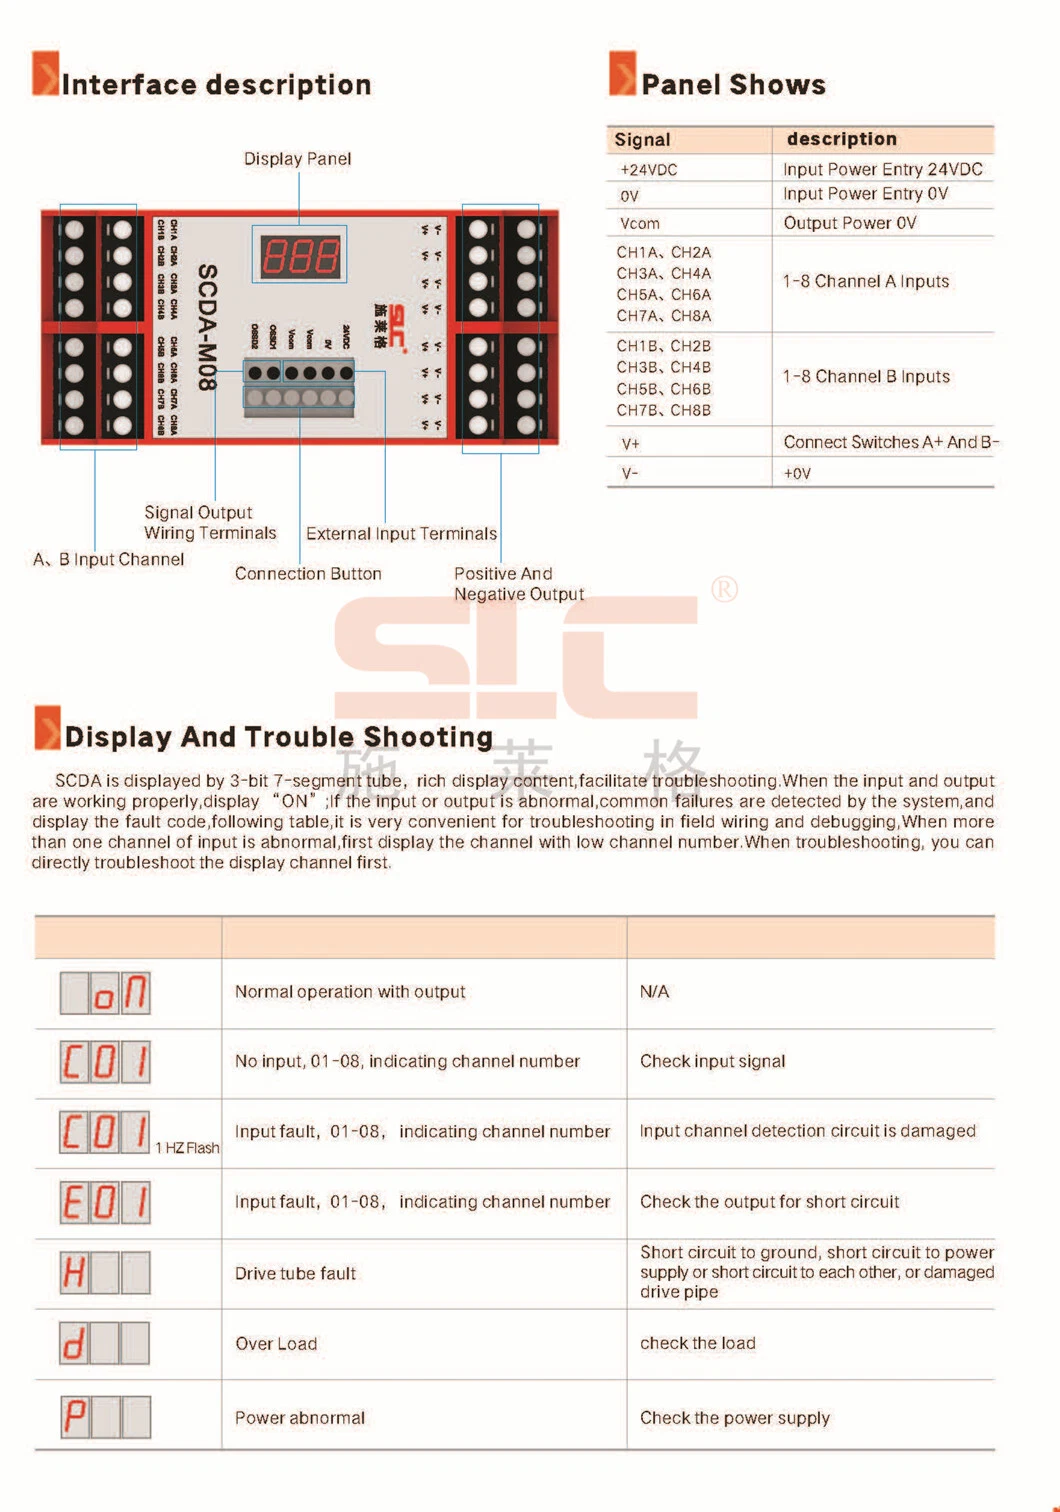 SCDA-M08 Series Safety Relay Module,OSSD Transistor signal input